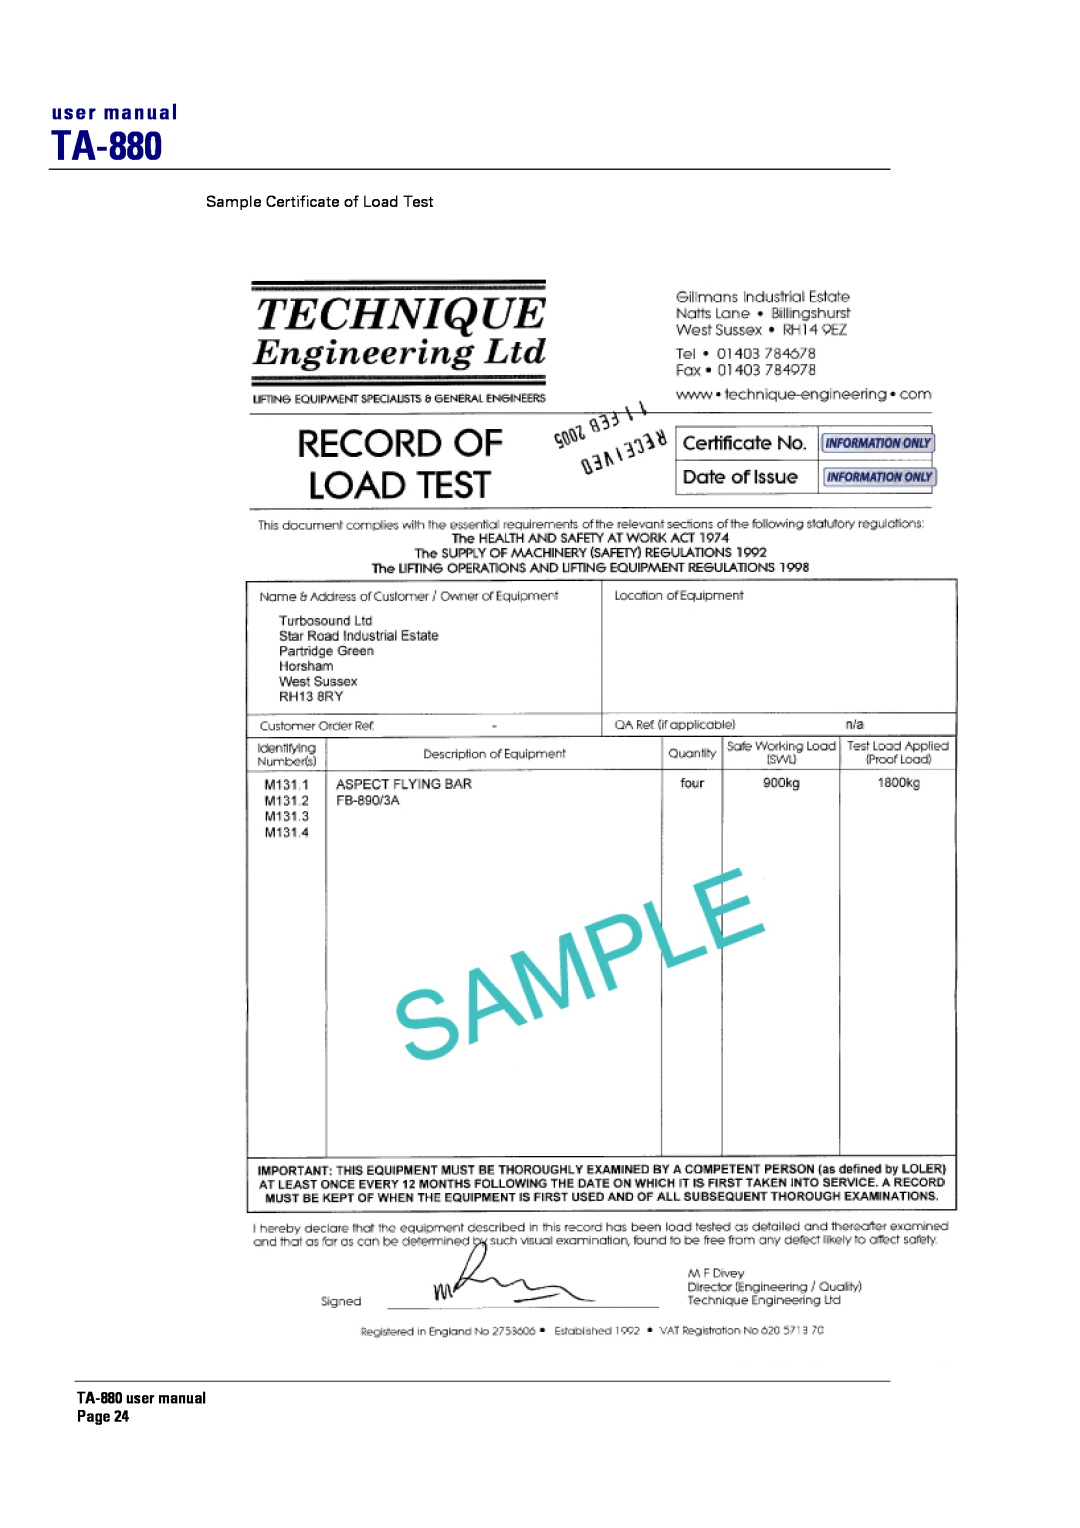 Turbosound TA-880 user manual Sample Certificate of Load Test 